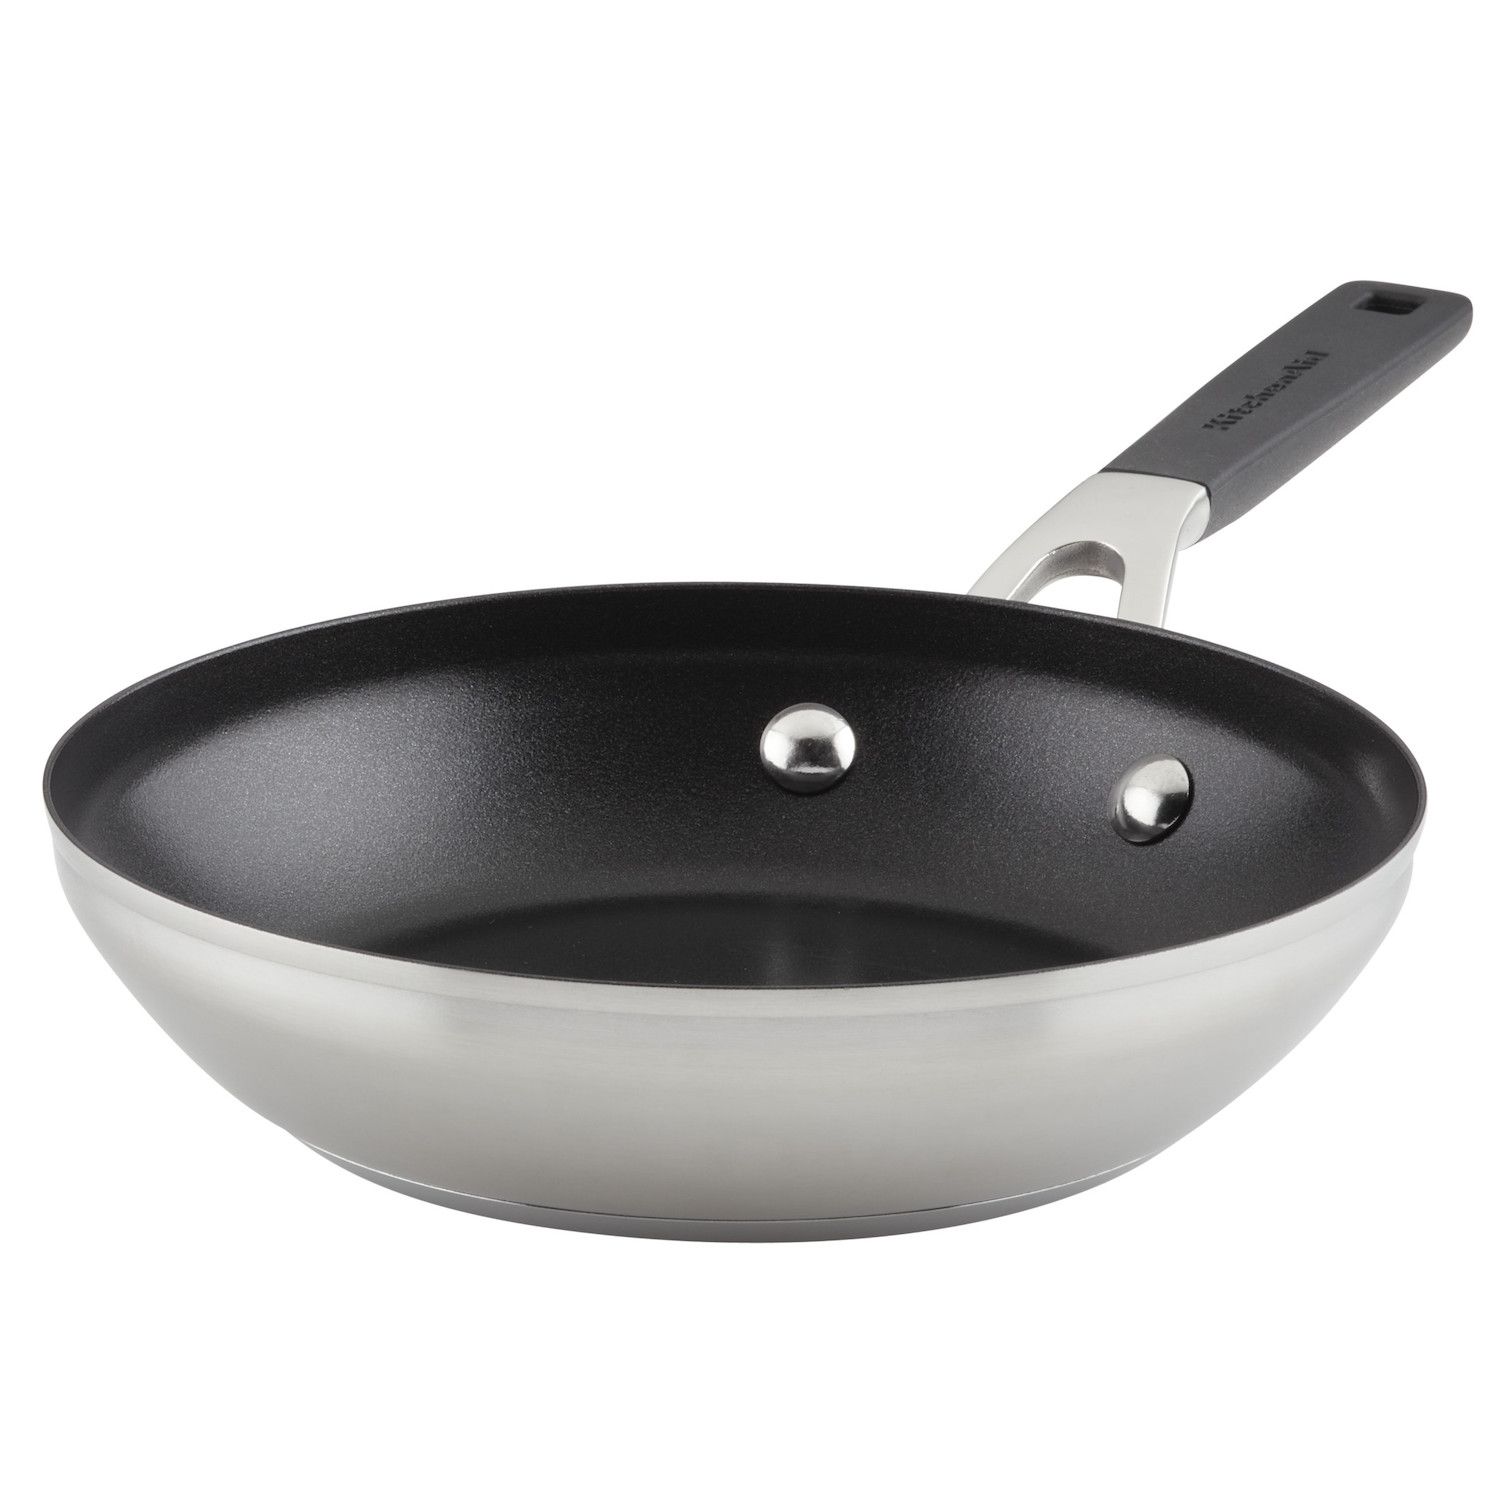 TECHEF - Eggcelente Pan, Swedish Pancake Pan, Plett Pan, Multi Egg